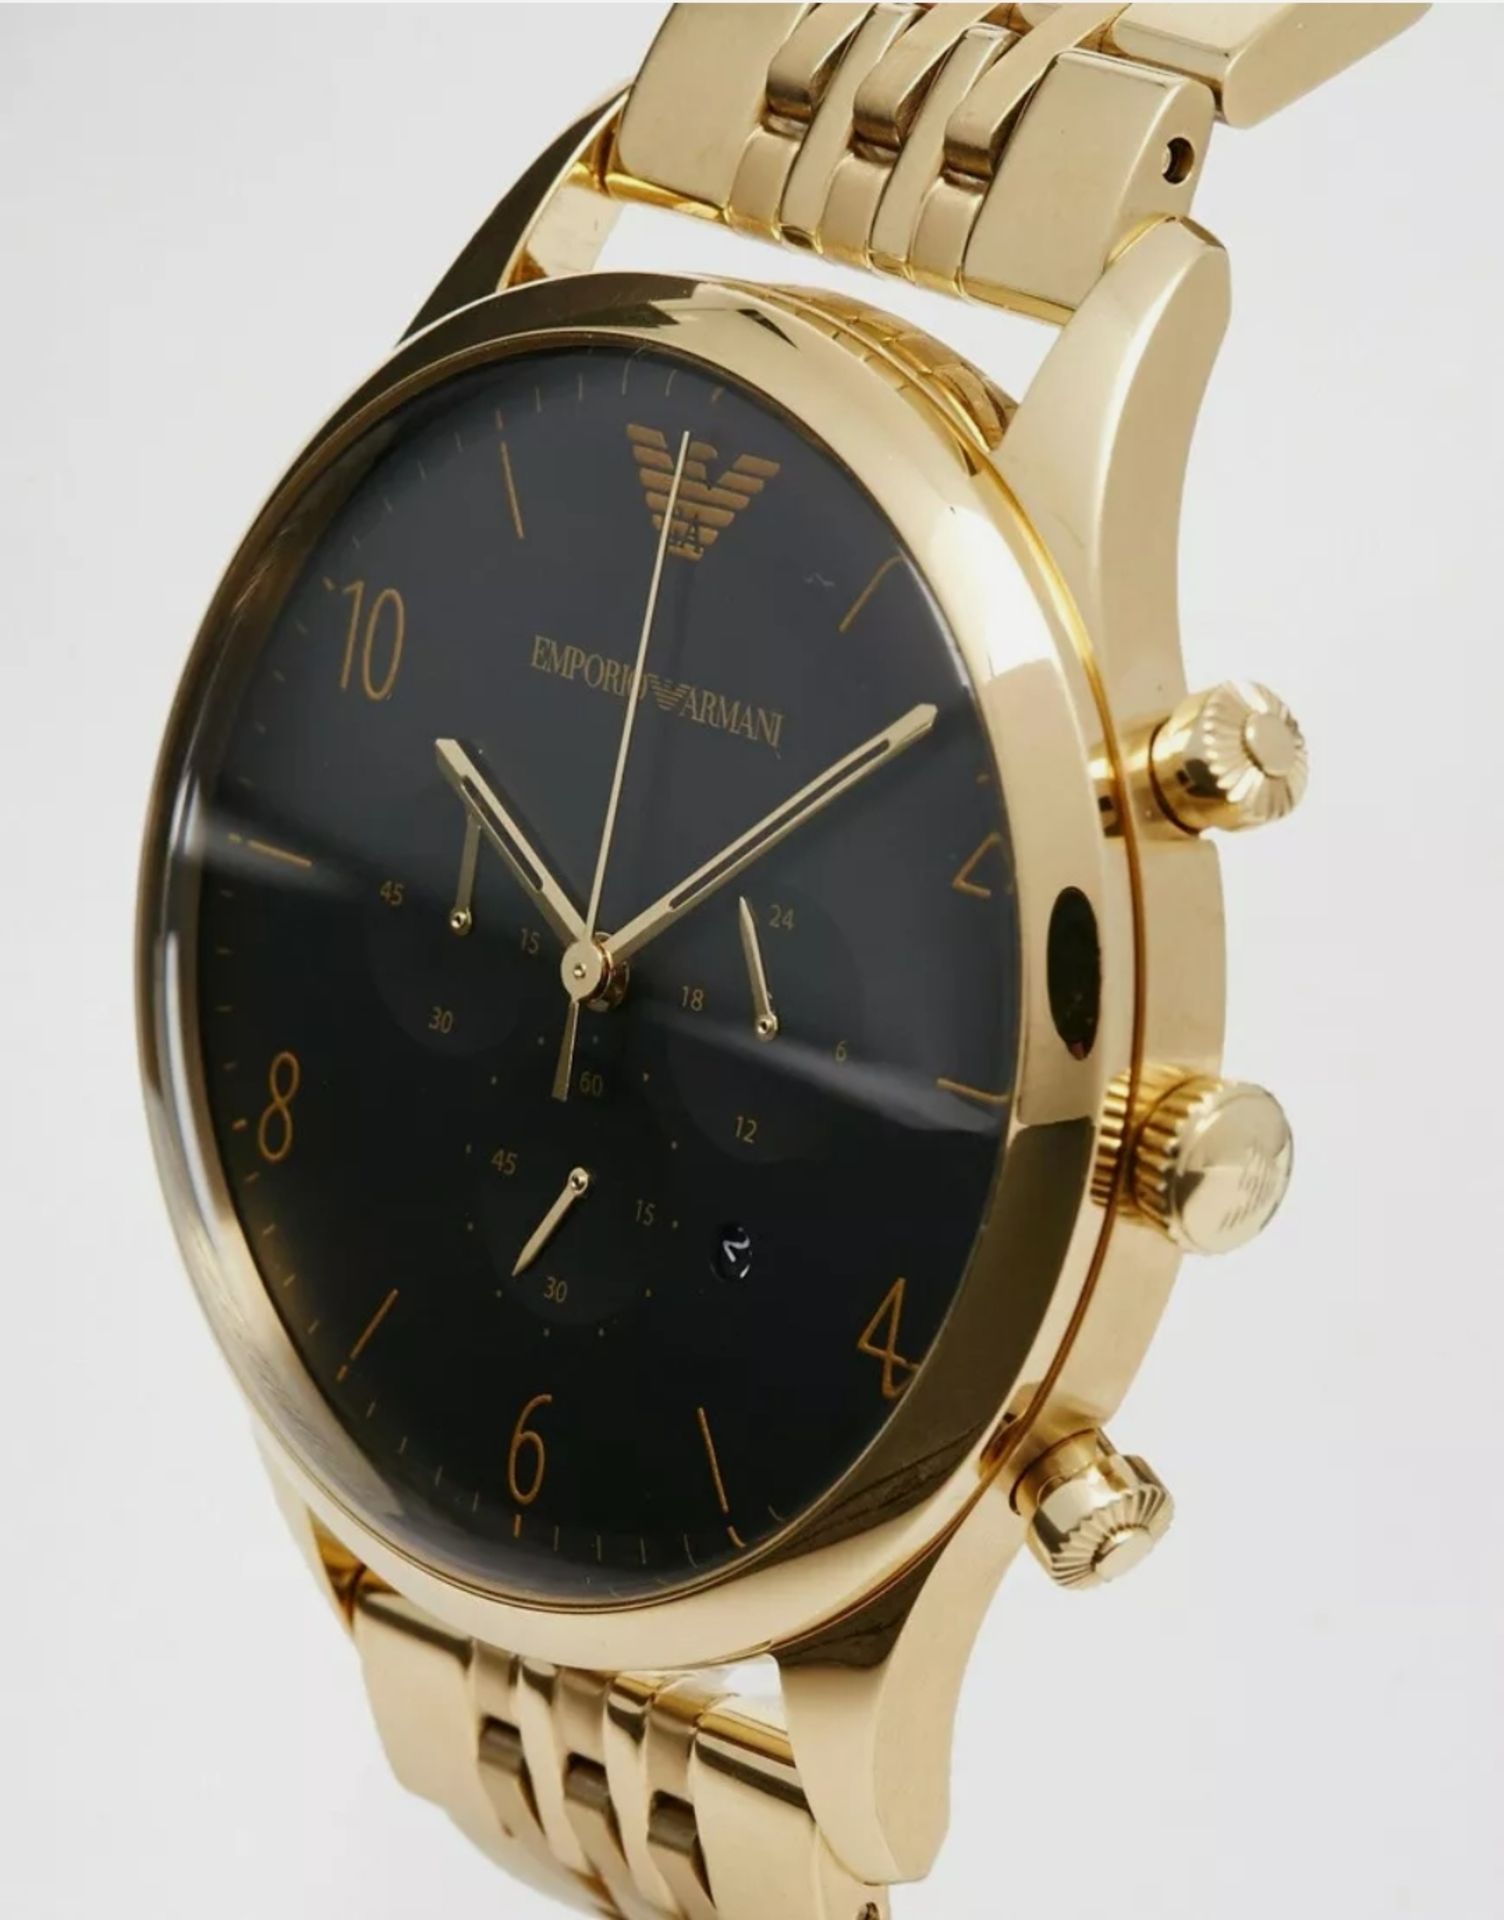 Emporio Armani AR1893 Men's Black Dial Gold Tone Bracelet Quartz Chronograph Watch - Image 5 of 7